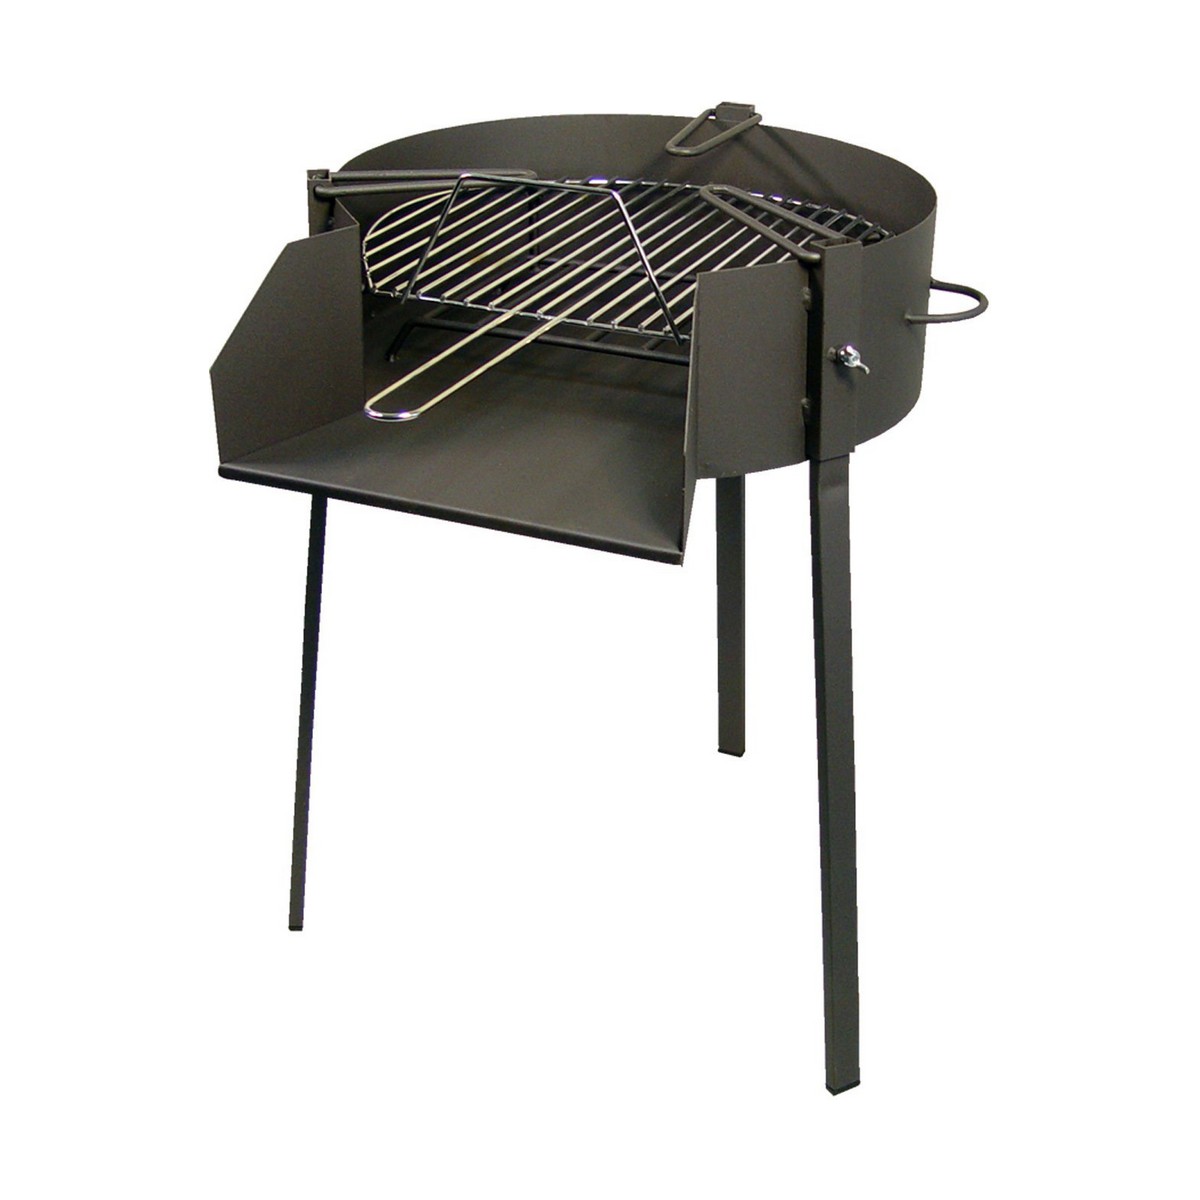 Charcoal Barbecue with Stand Imex el Zorro Black (Ø50 x 75 cm)